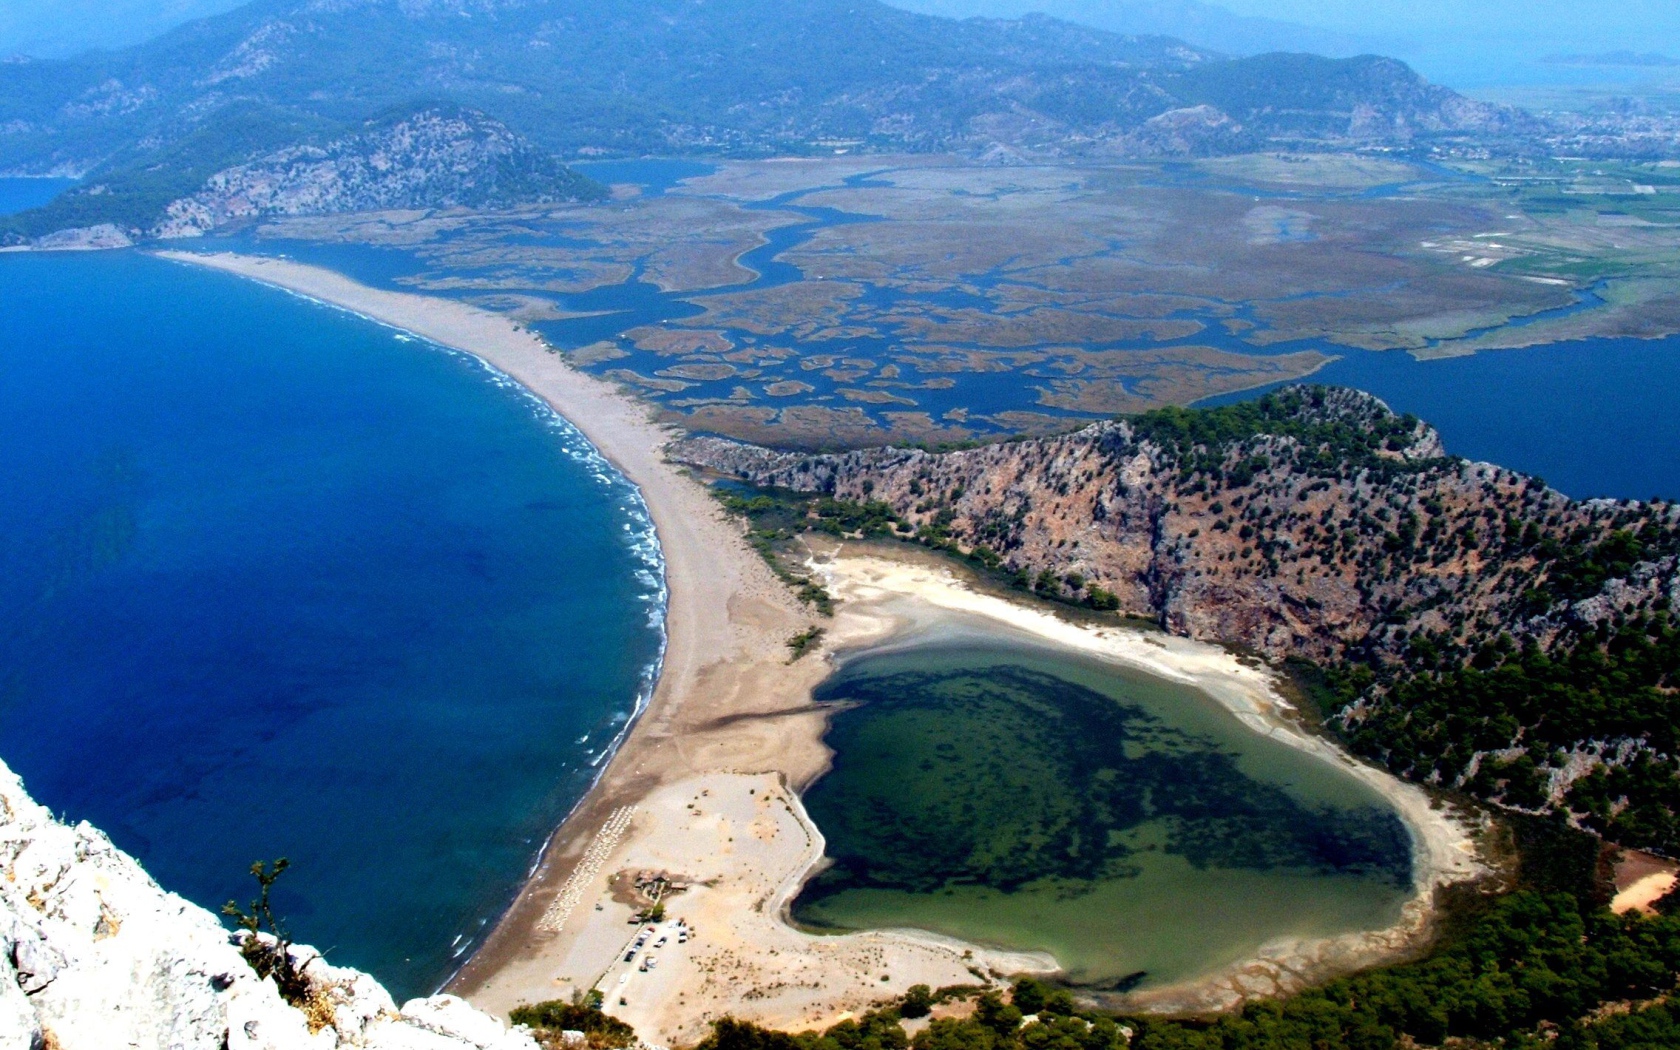 The resort of Marmaris, Turkey